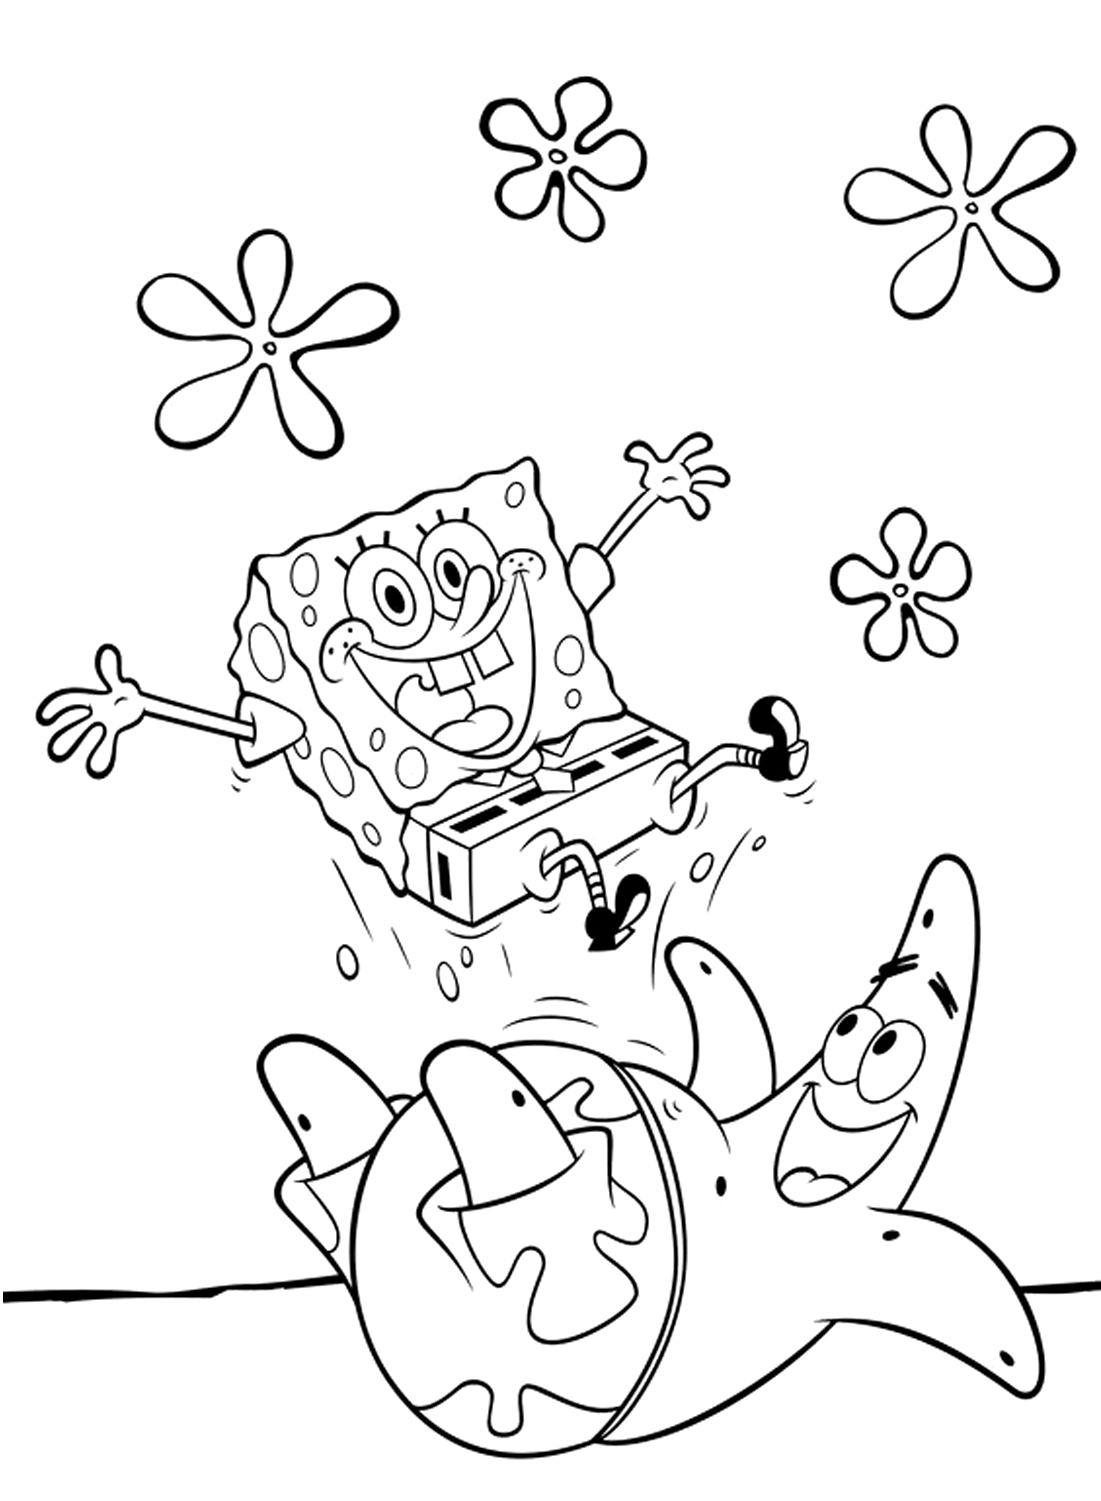 Happy Spongebob Squarepants Coloring Page from Spongebob